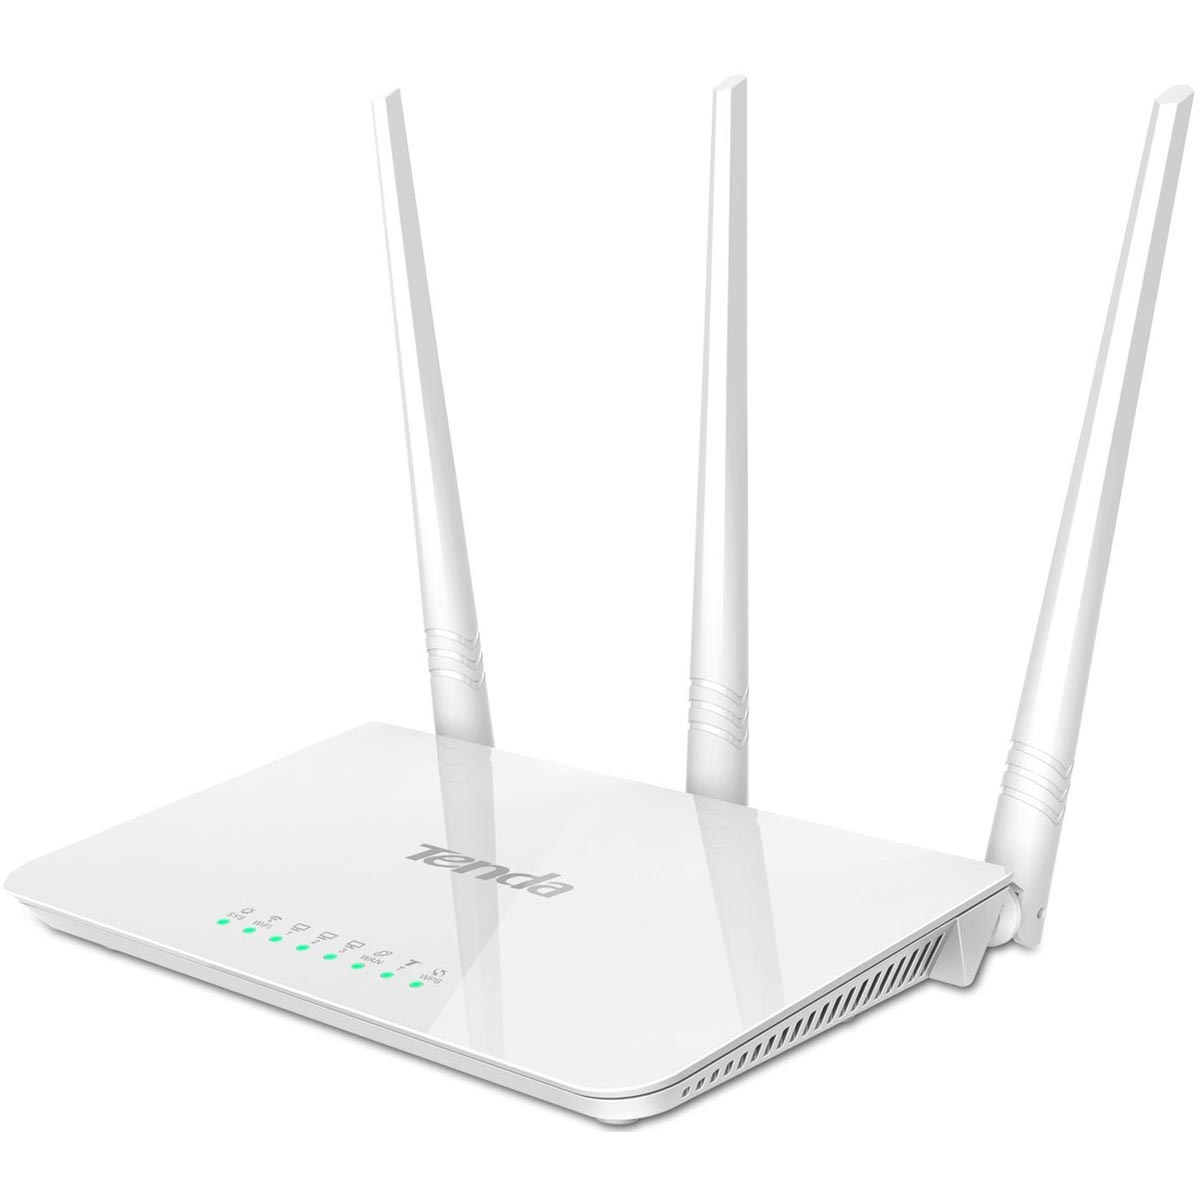 Wi-Fi роутер TENDA F3, 300 Мбит/с, цвет белый